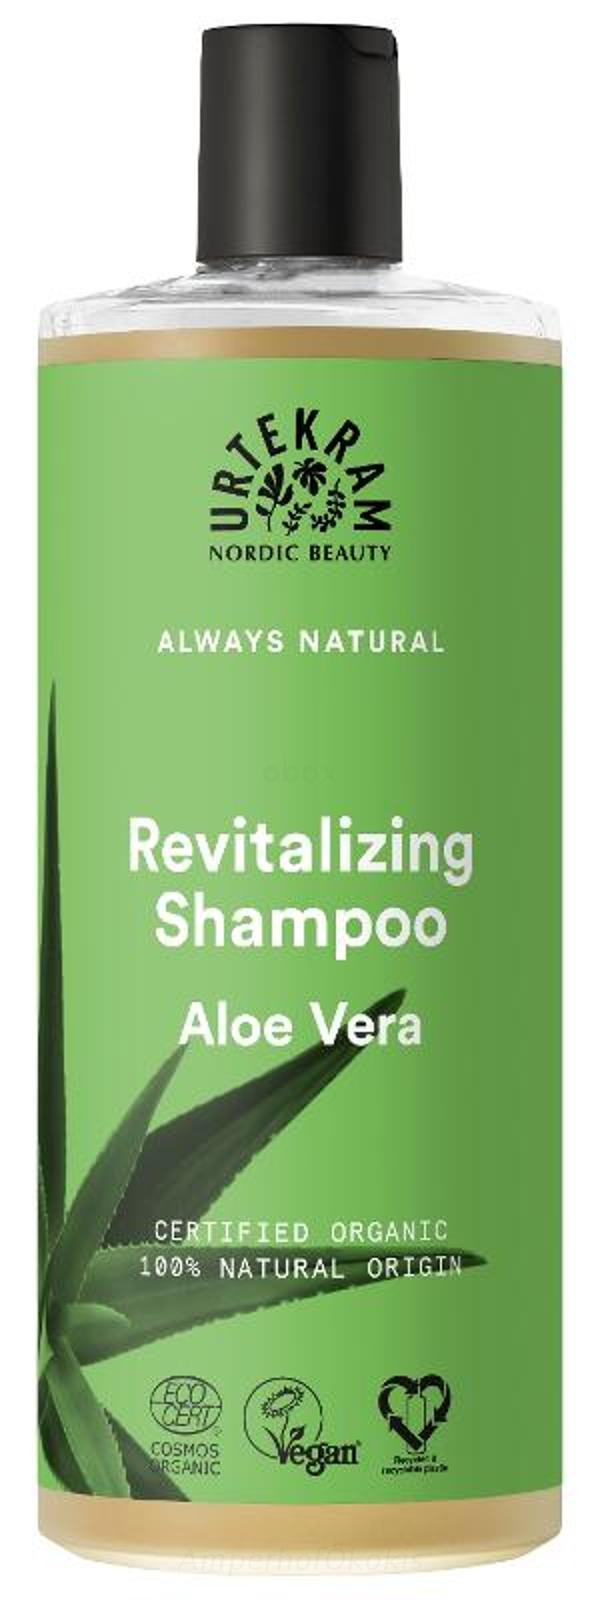 Produktfoto zu Shampoo Aloe Vera 500 ml